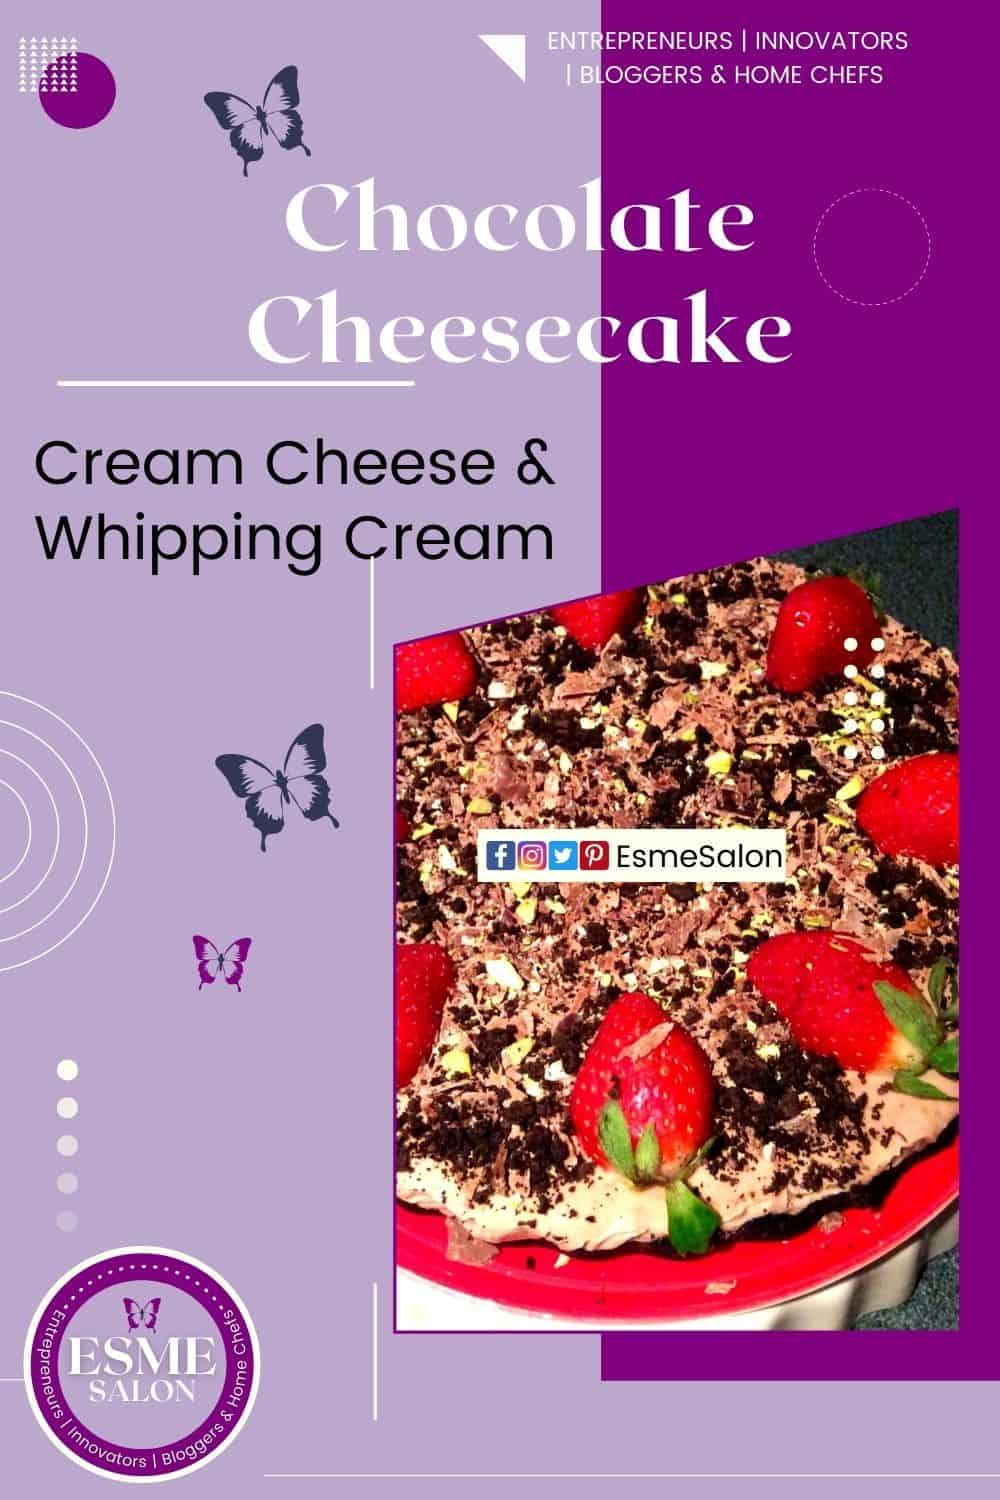 Chocolate Cheesecake with cream cheese, whipping cream and strawberries